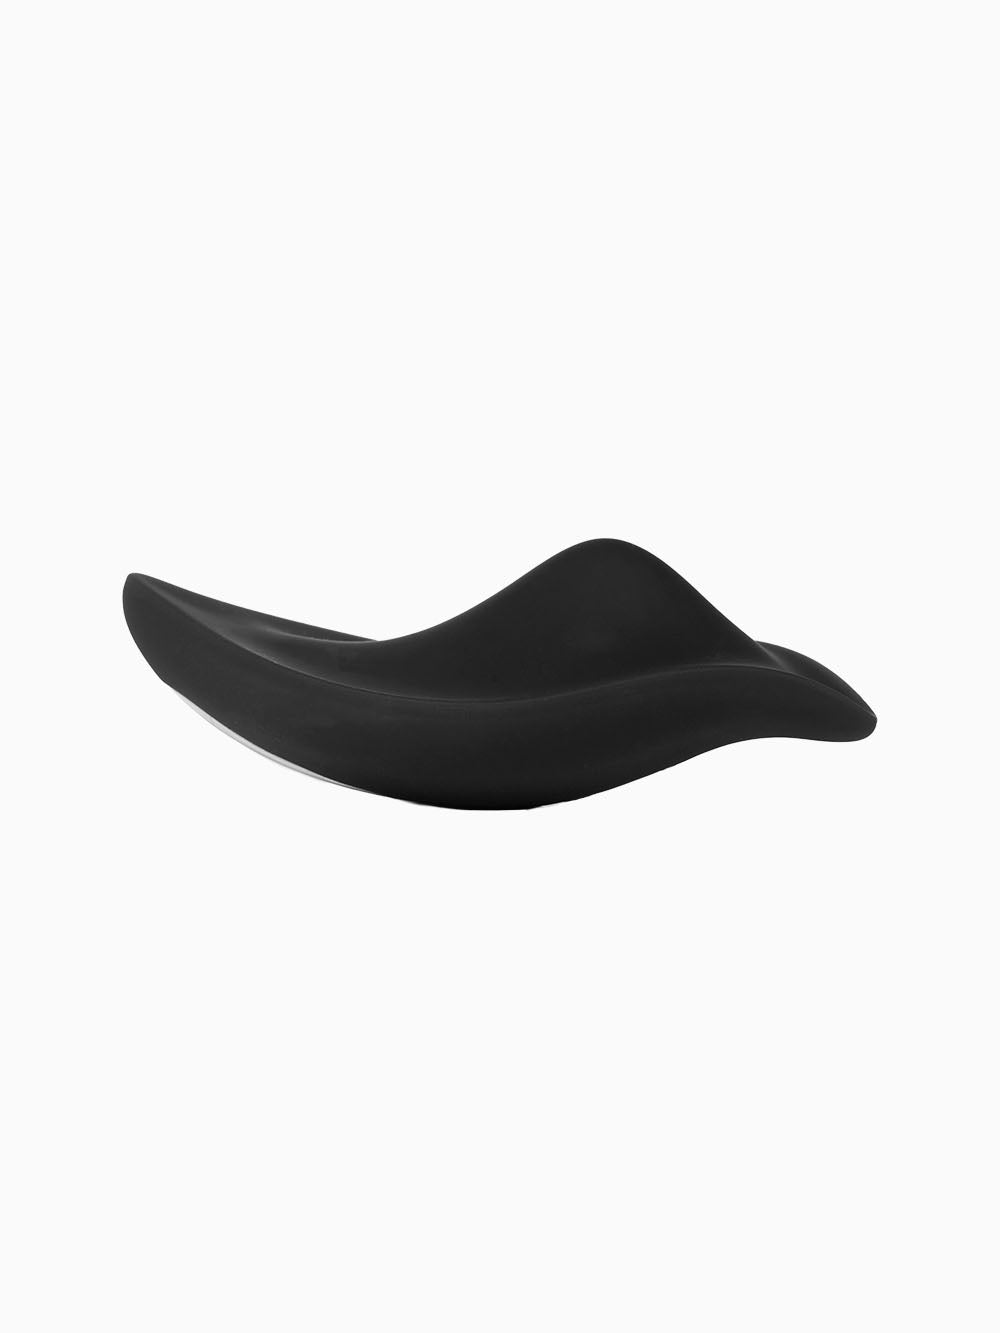 Pillow Talk Wearable Clitoral Vibrator Black, 3 Inches